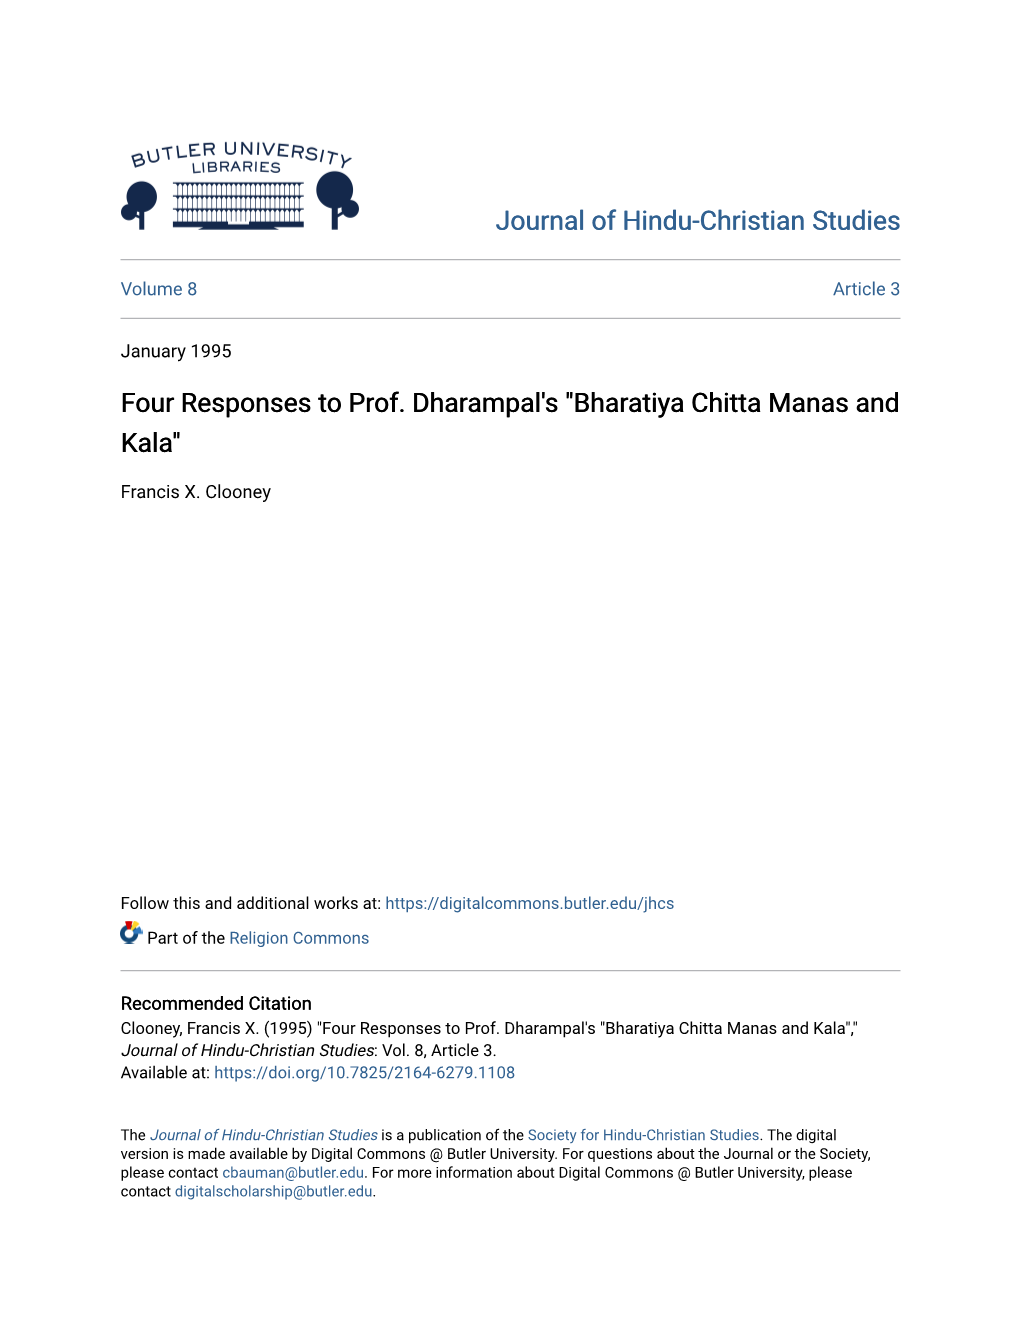 Four Responses to Prof. Dharampal's "Bharatiya Chitta Manas and Kala"